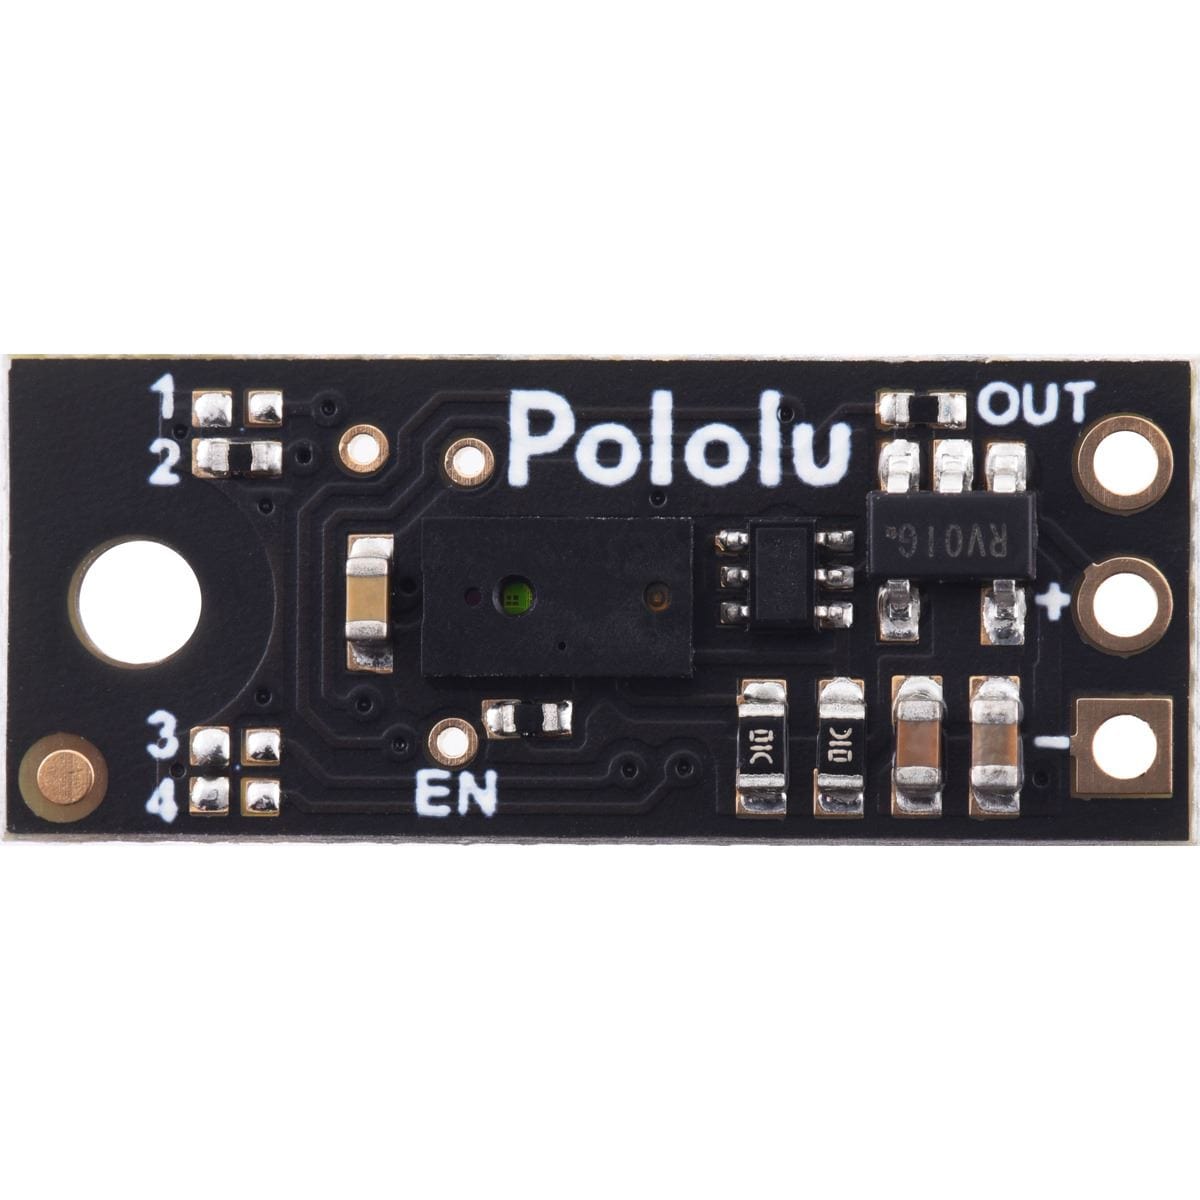 Pololu Digital Distance Sensor 10cm - The Pi Hut